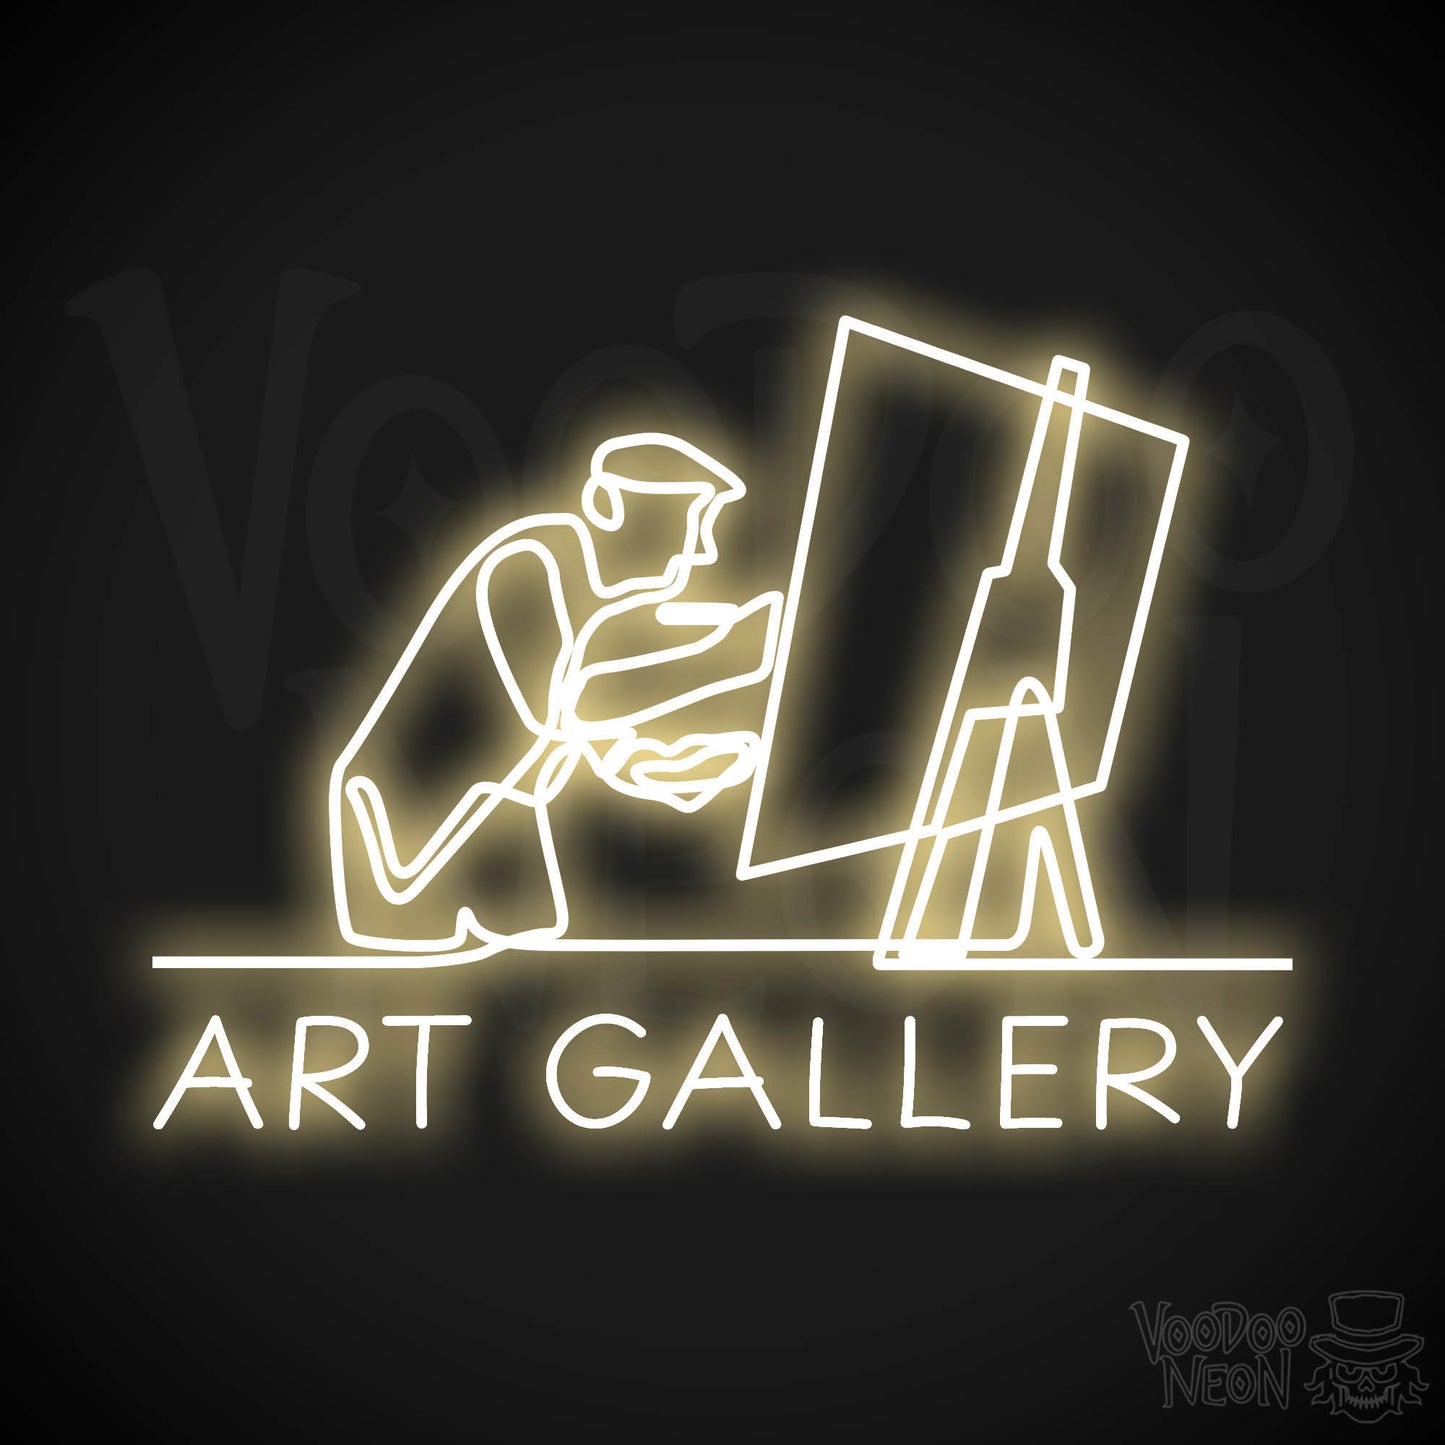 Art Gallery LED Neon - Warm White